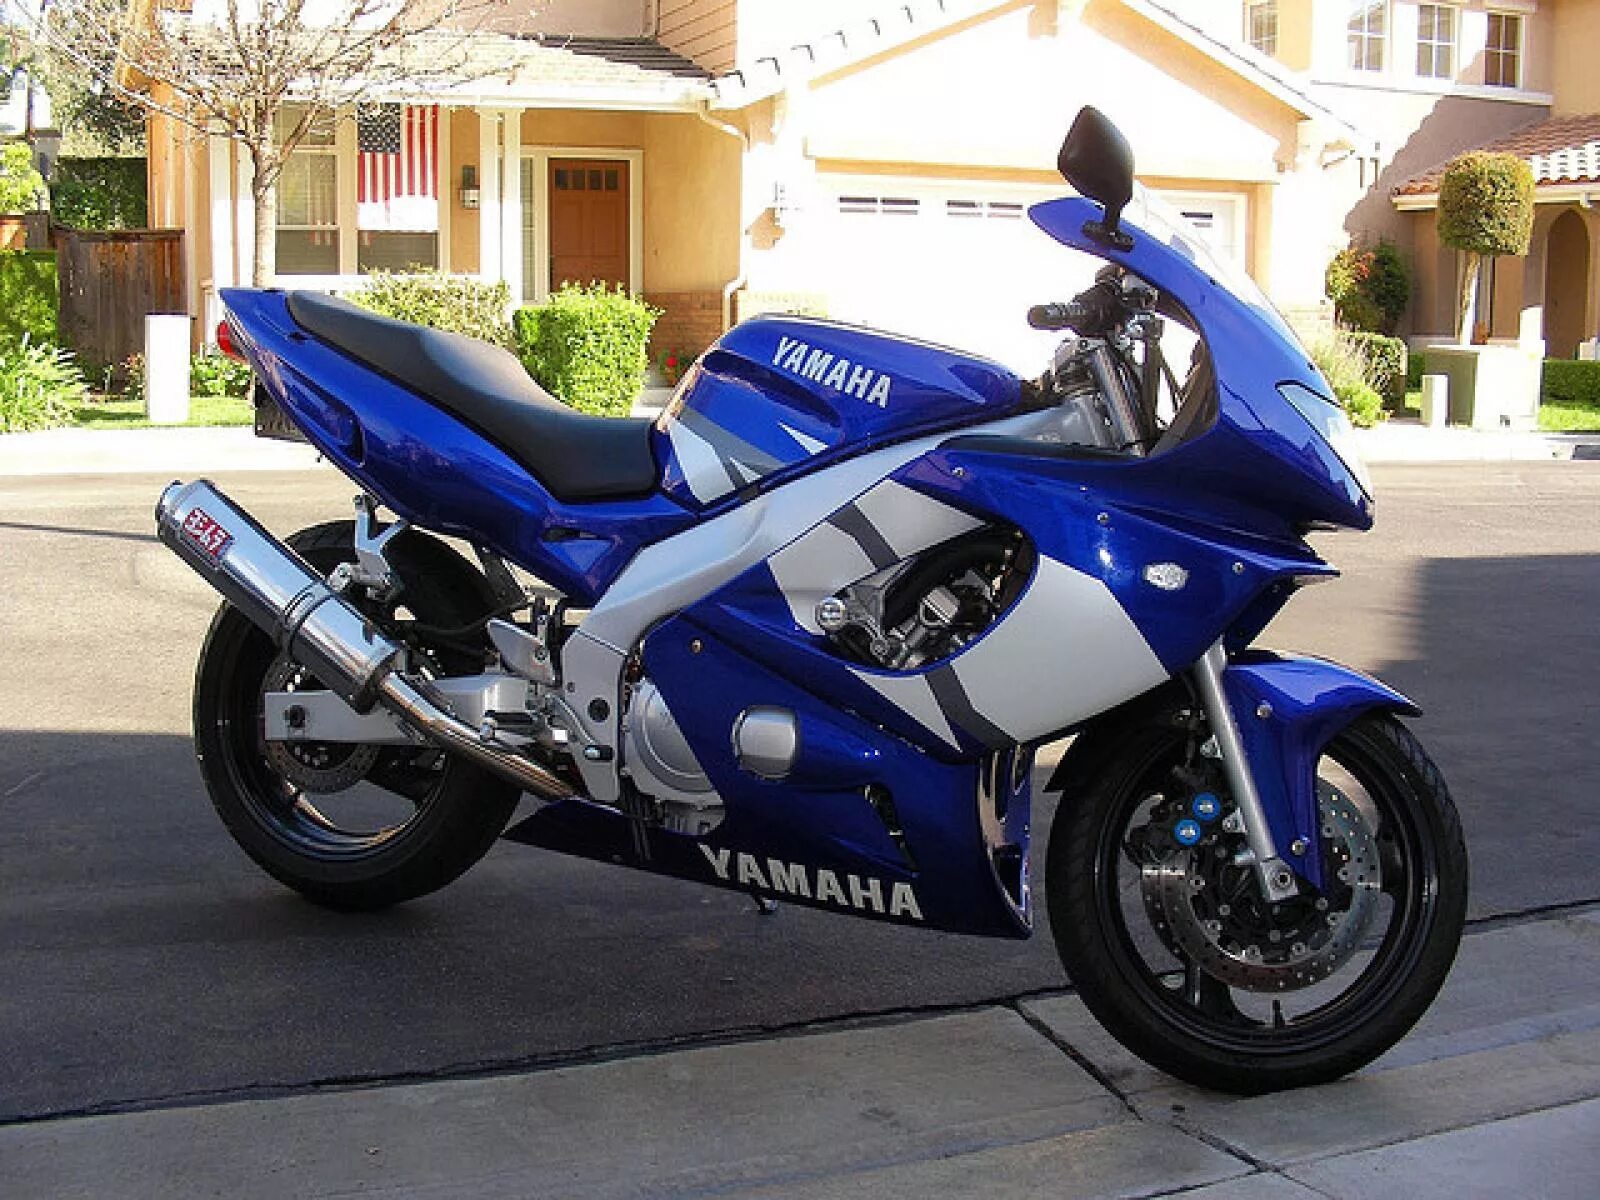 Yamaha купить б у. Yamaha yzf600r. Yamaha YZF 600 Thundercat. Ямаха yzf600r Thundercat. Yamaha yzf600r Thundercat 2002.